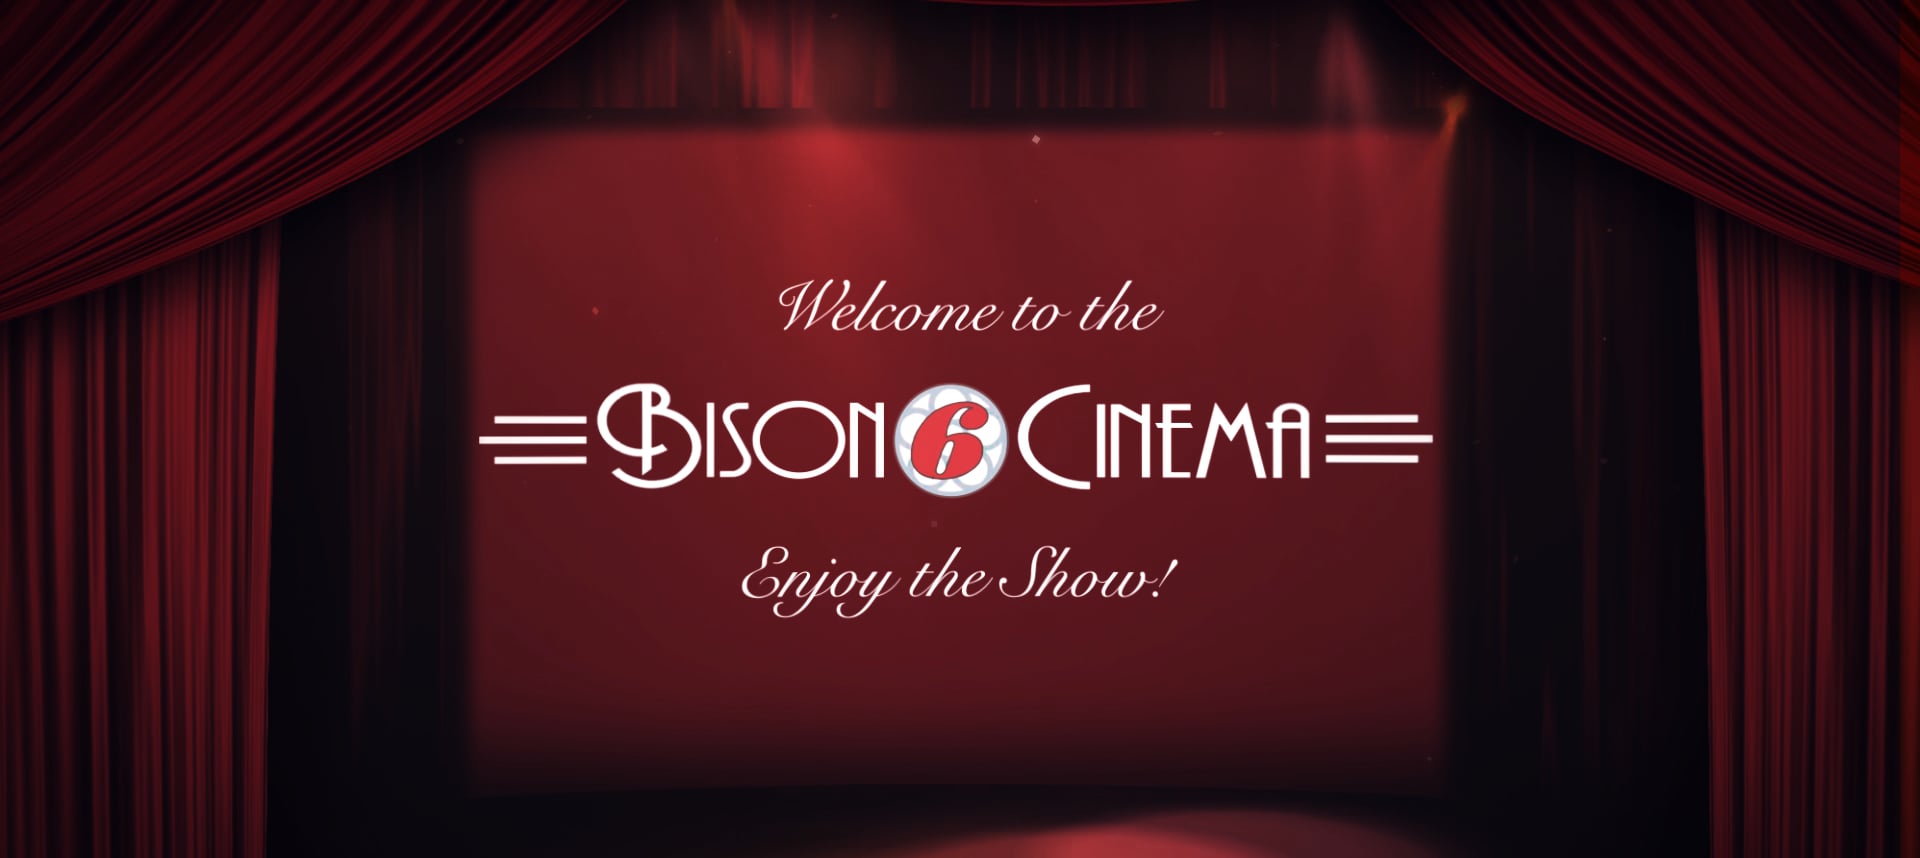 Bison Cinema 6 20210205 on Vimeo